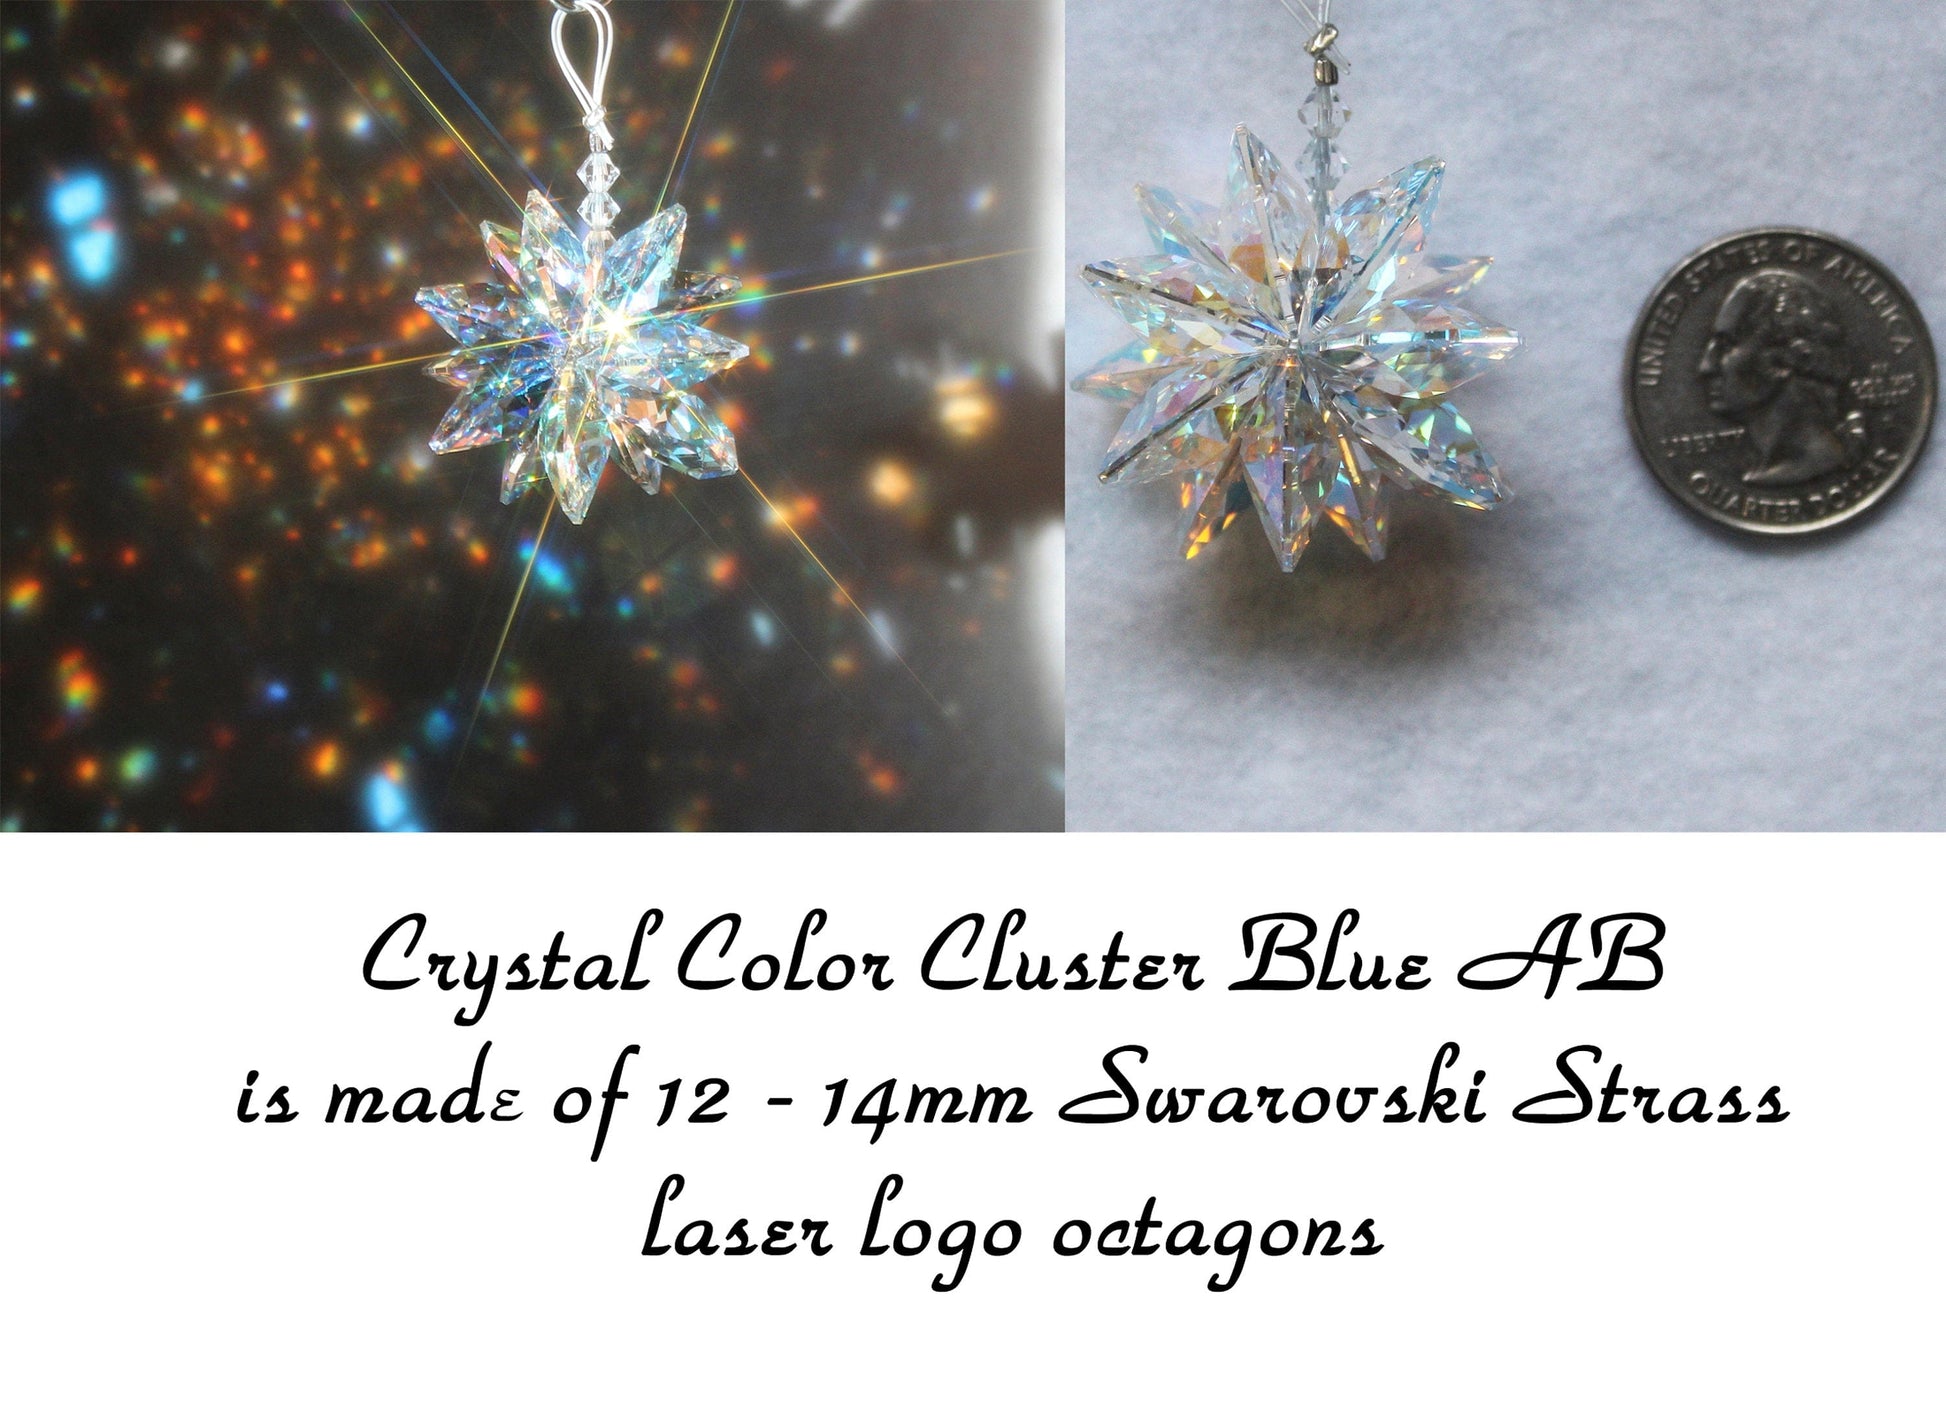 Chakra Art Crystal Sun Catcher, Exquisite Light Catcher, Mandala Art Wall Hanging, Rainbow Maker, Boho Hanging Window Prism Suncatcher 102